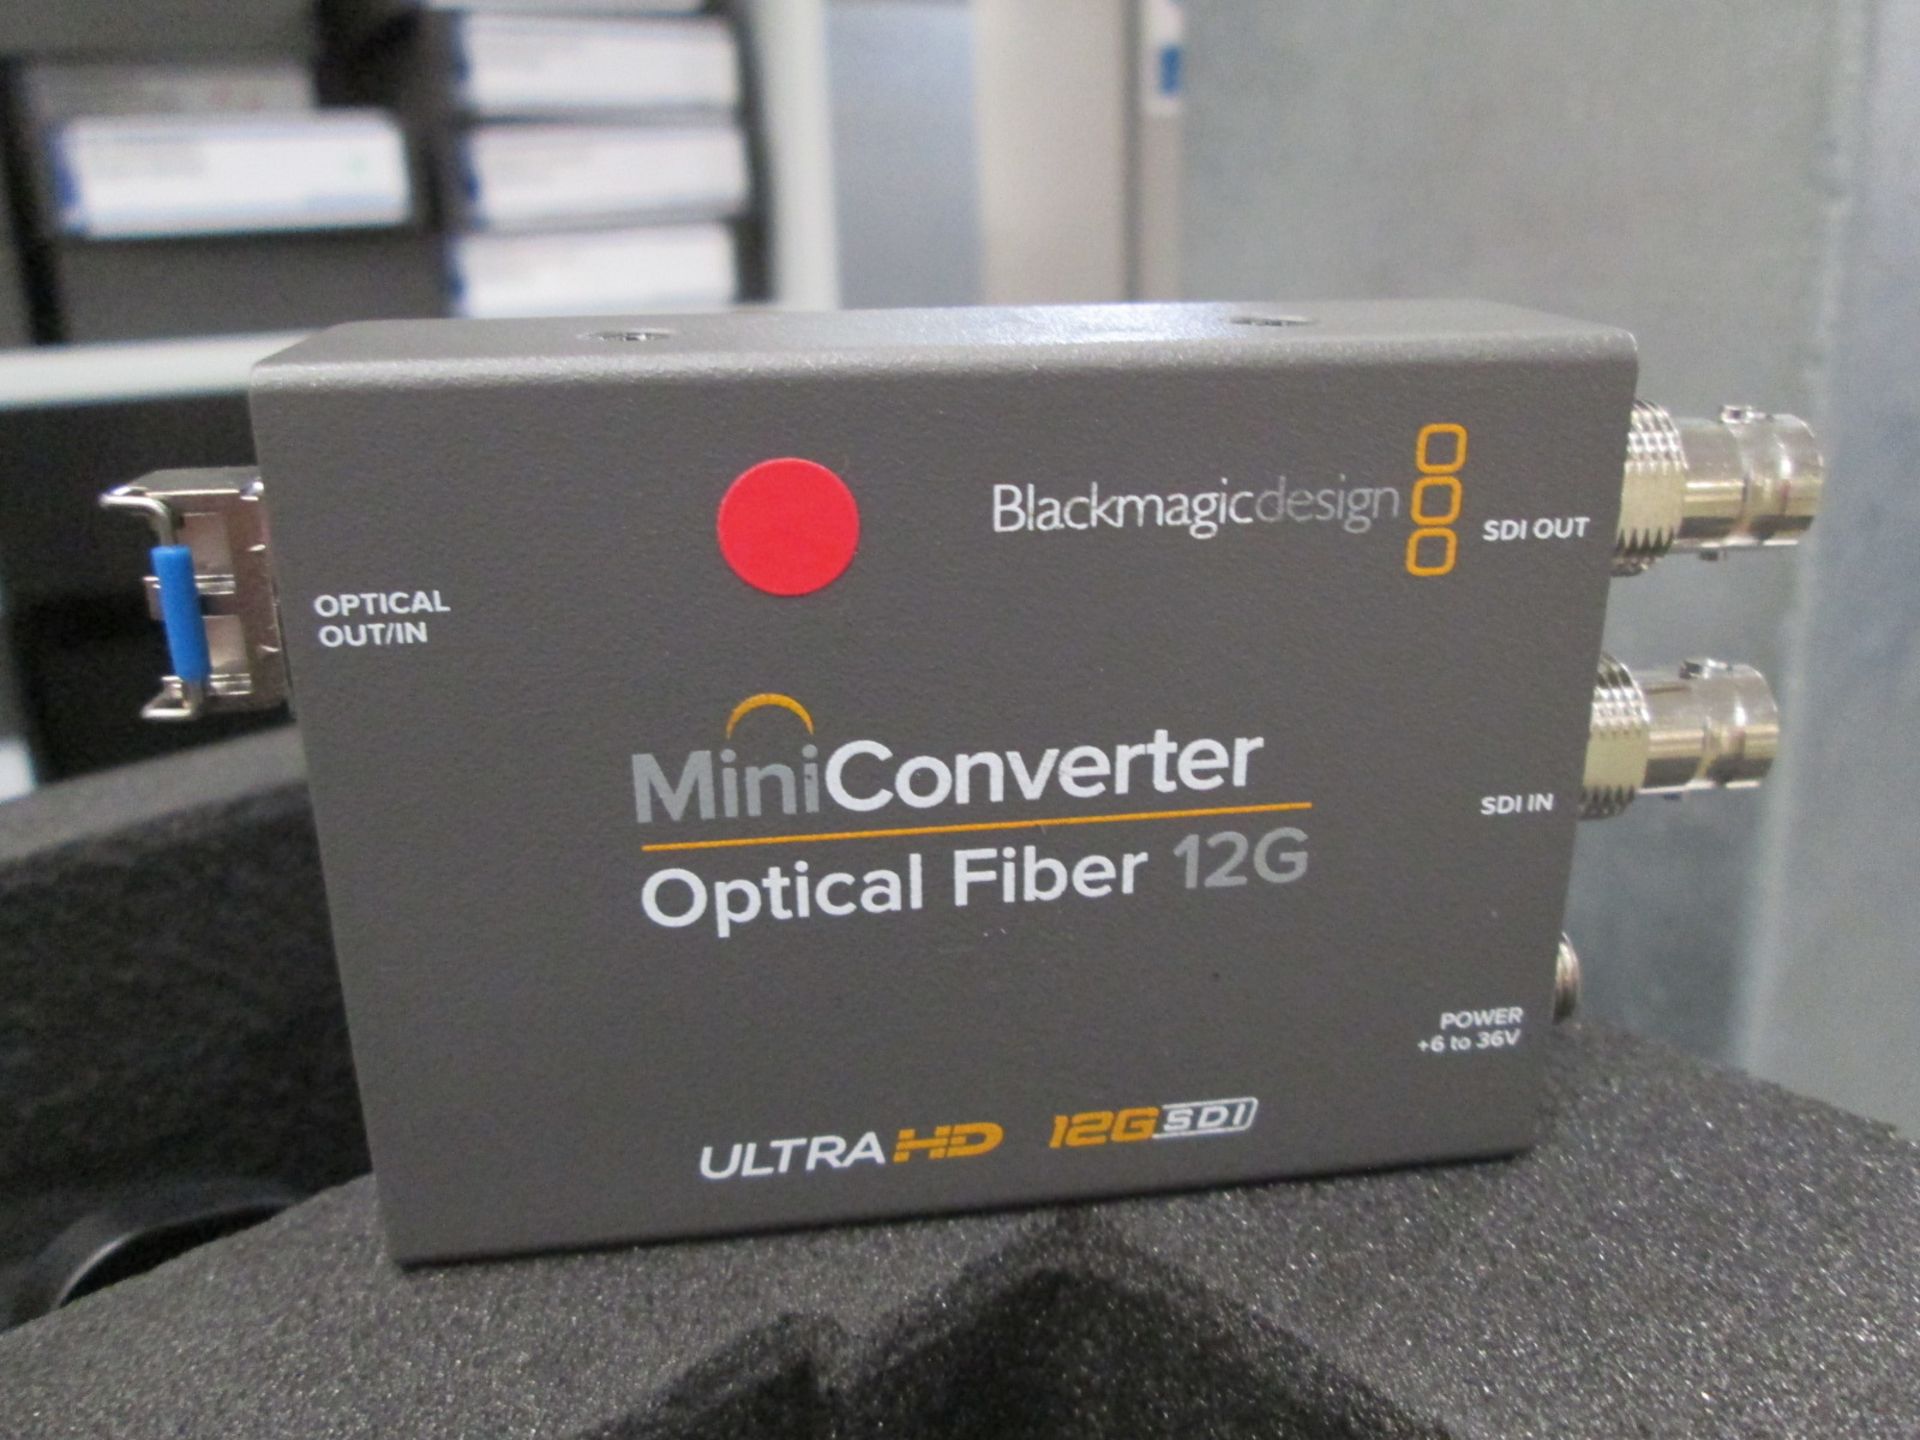 Blackmagic Design Optical Fibre 12G Mini Converter (Qty 6 pairs) - Image 2 of 6